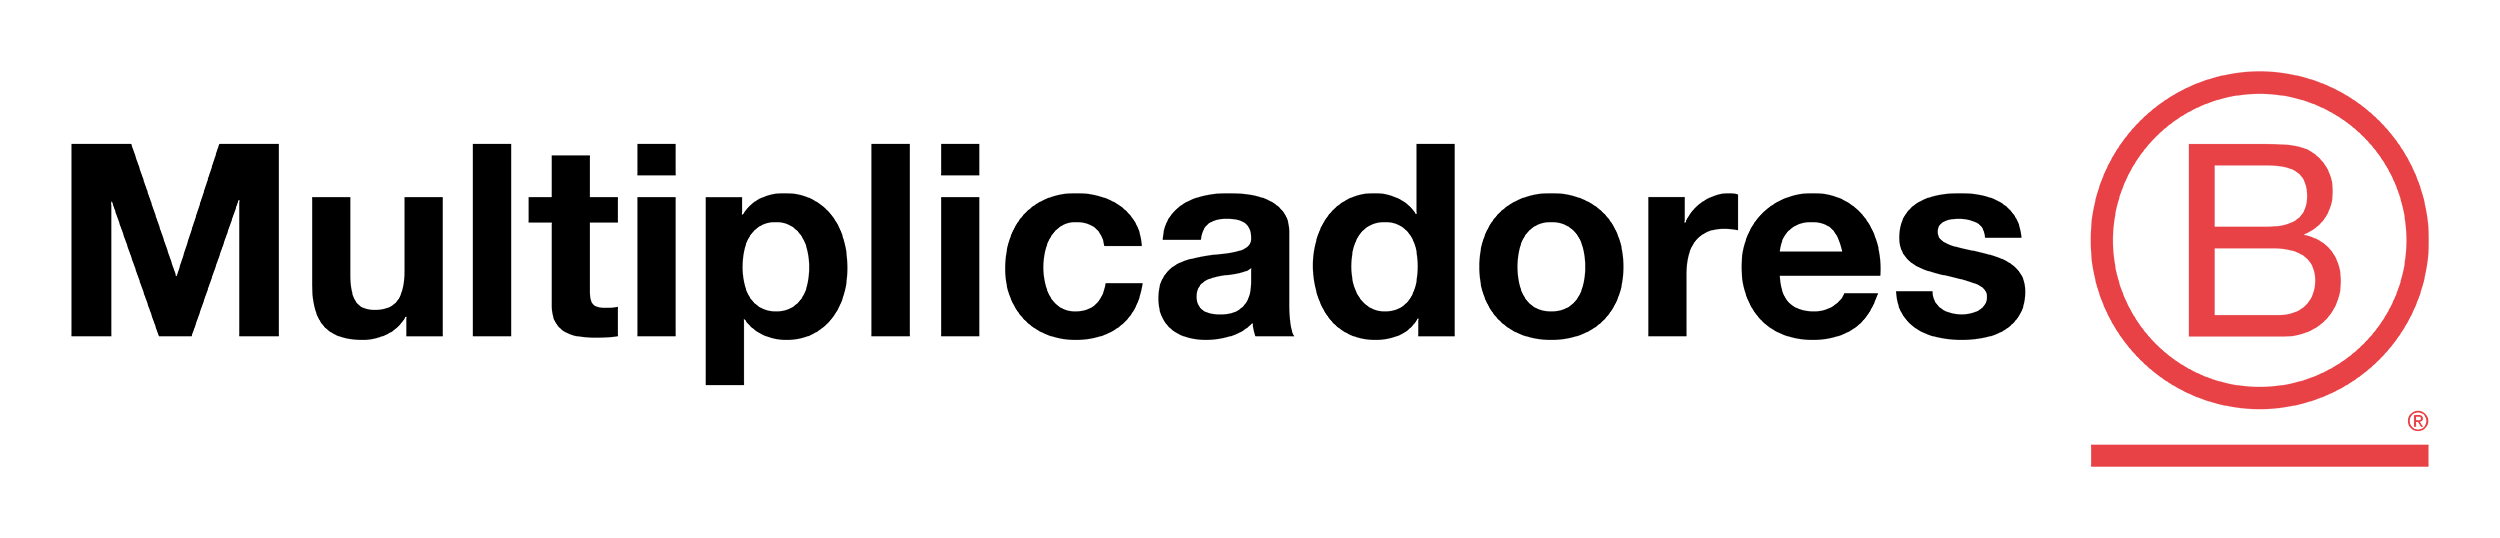 MultiplicadoresB_Logo2021_Color